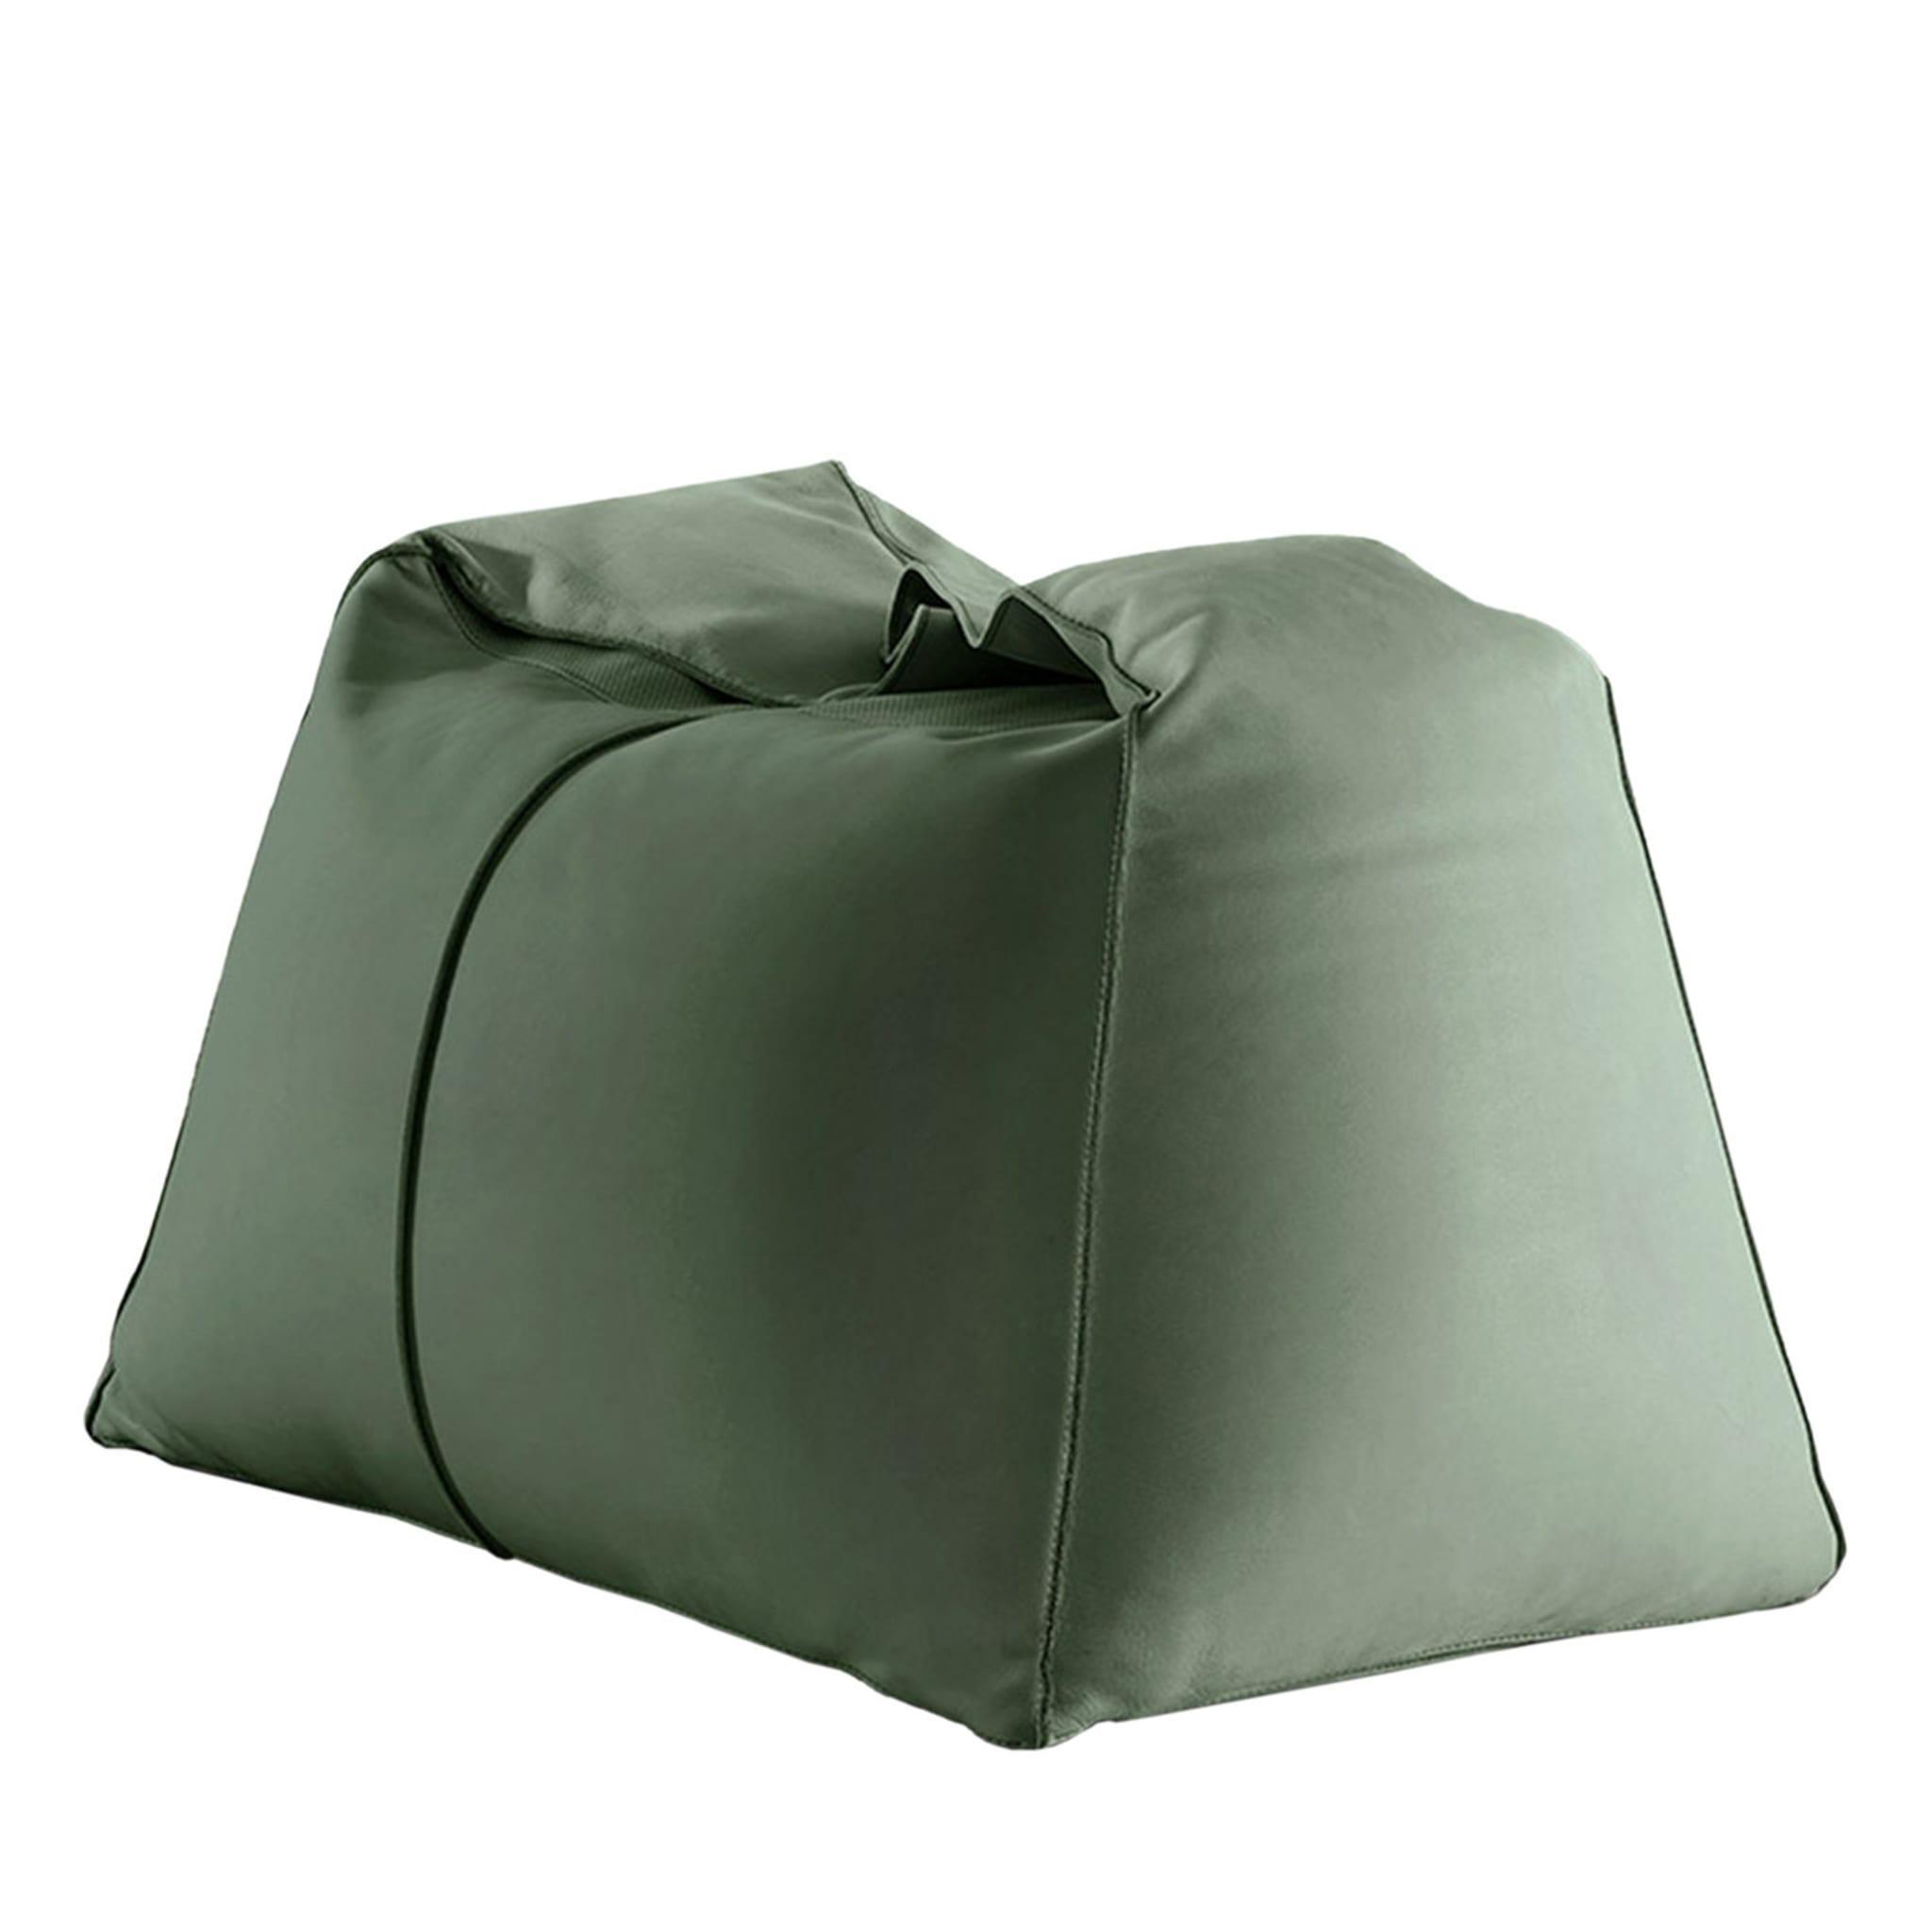 Luxury Green Bean Bag Chairs